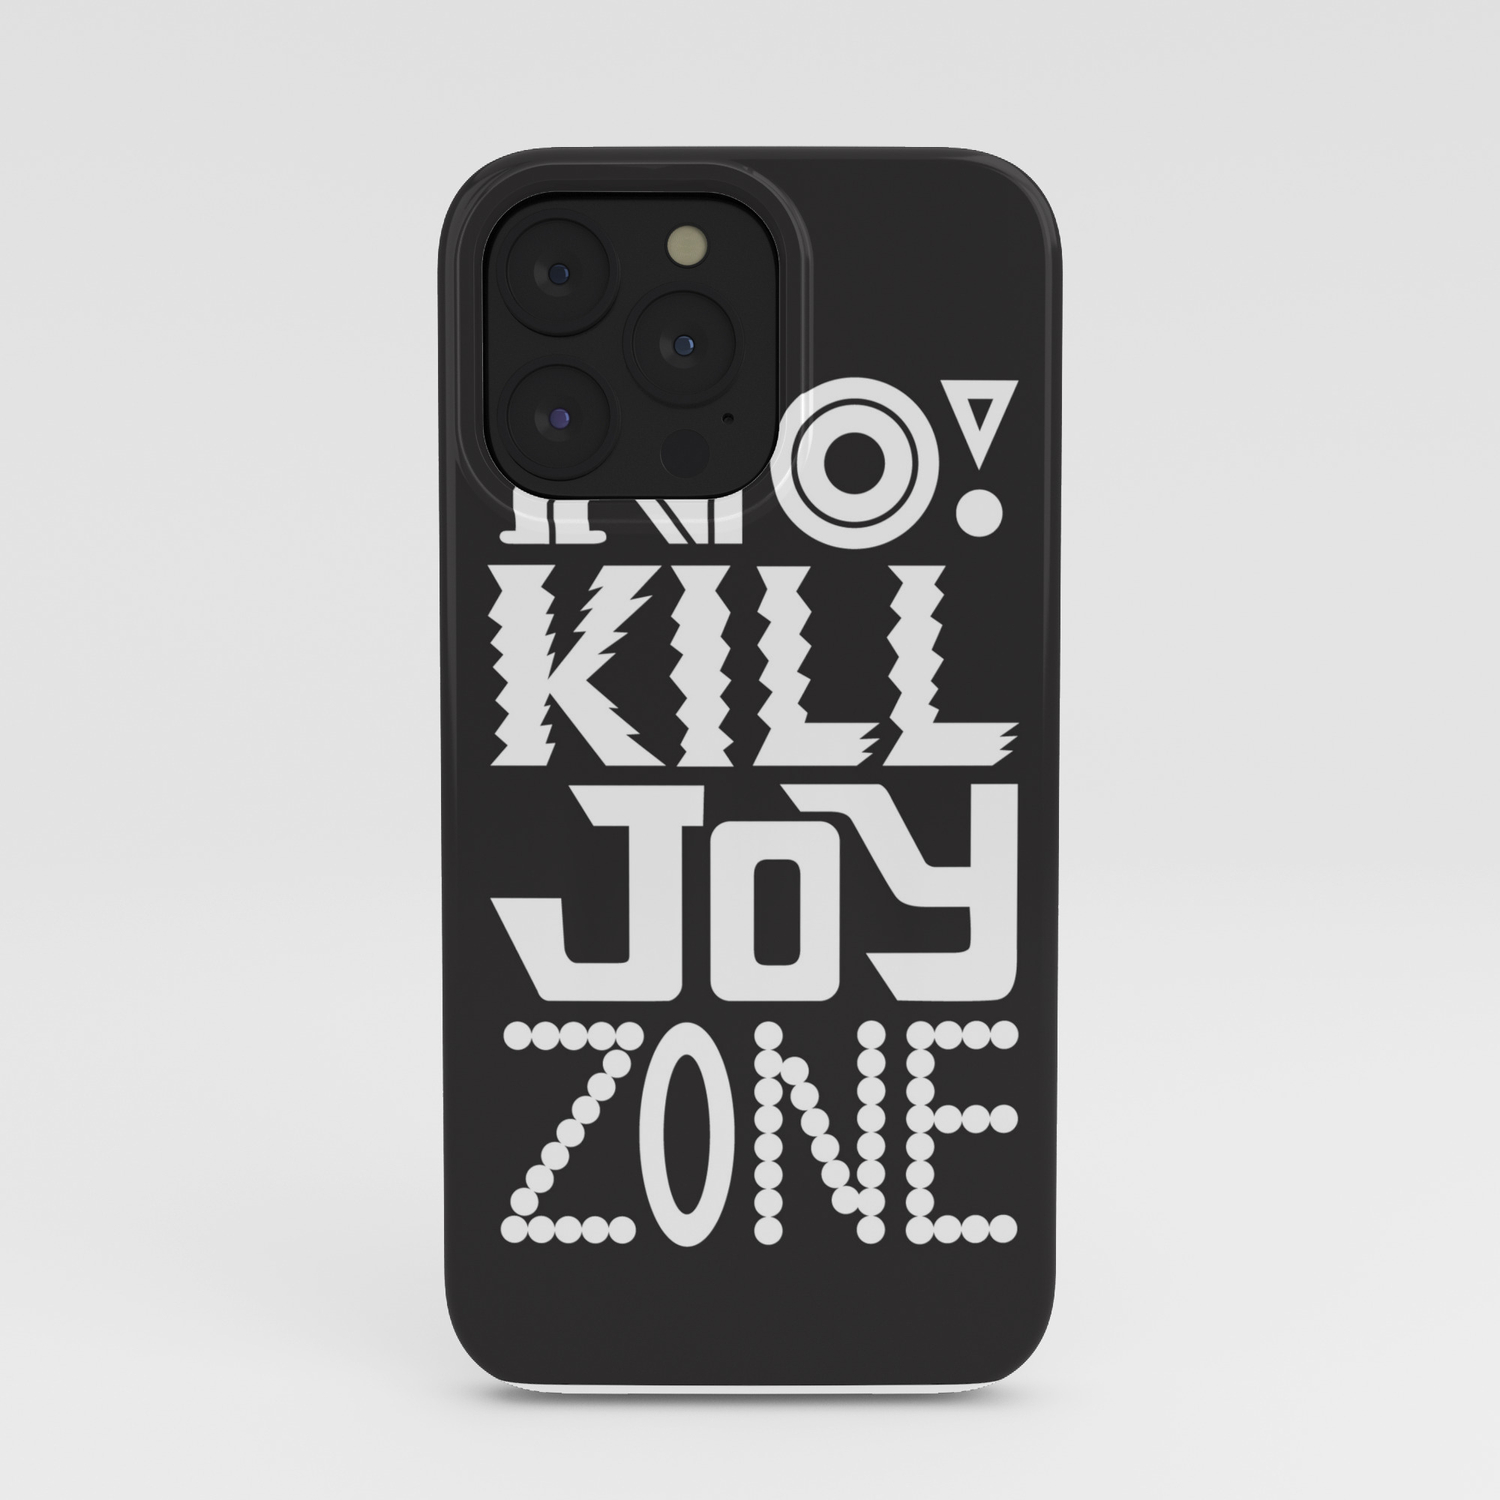 Zone joy Joy Zone